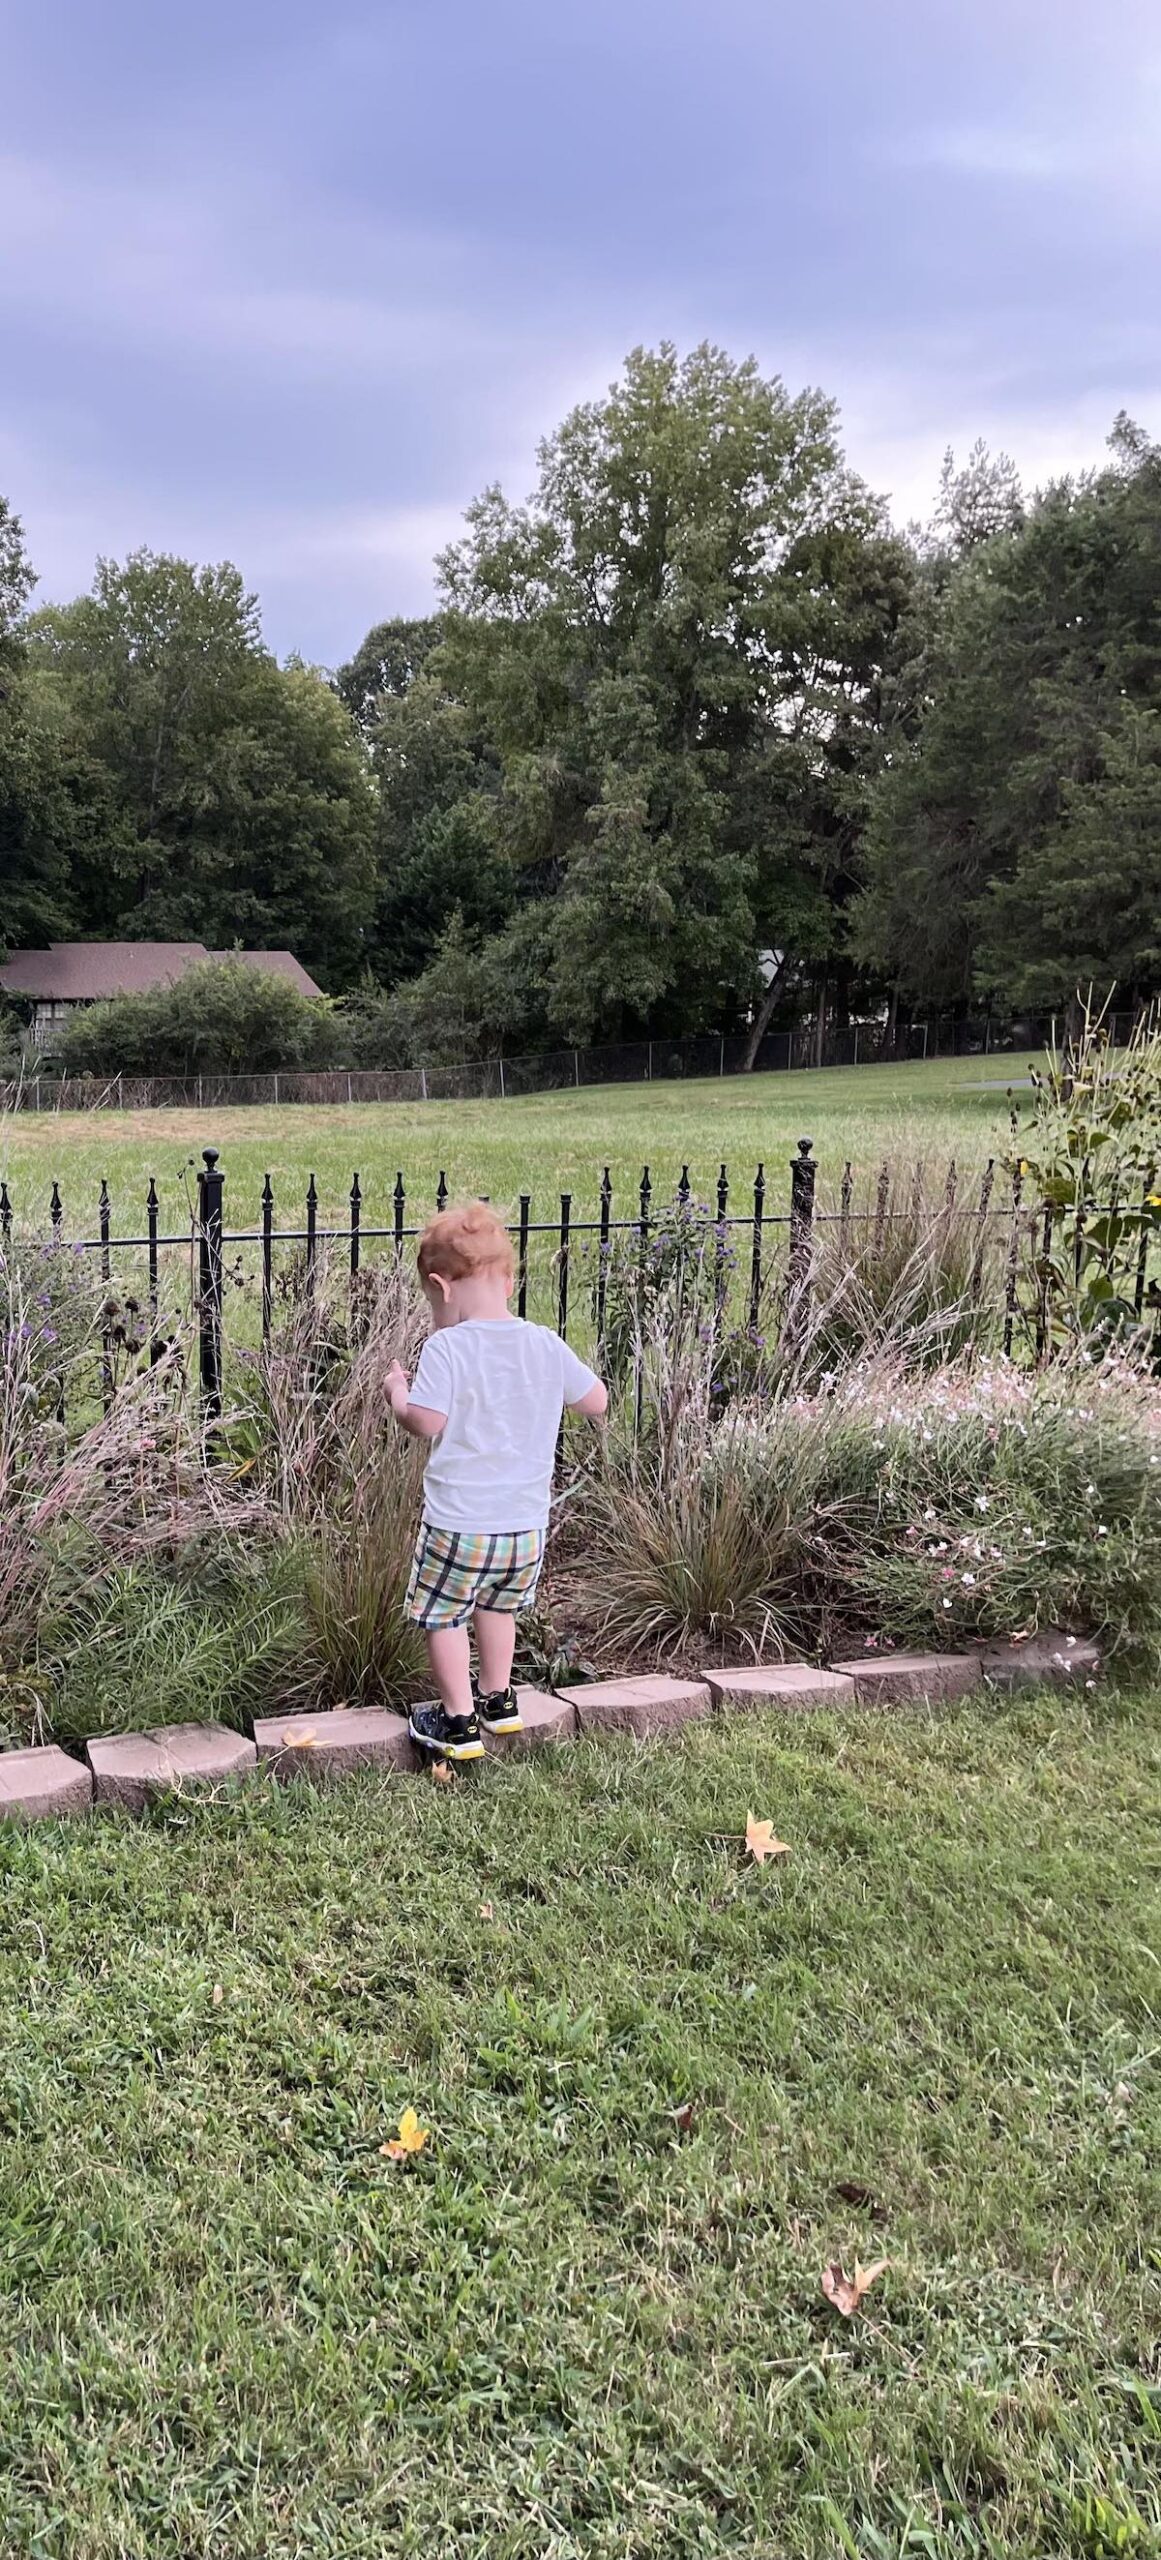 Boy looking at pollinator garden. Grant. Moravian Field of Interest.